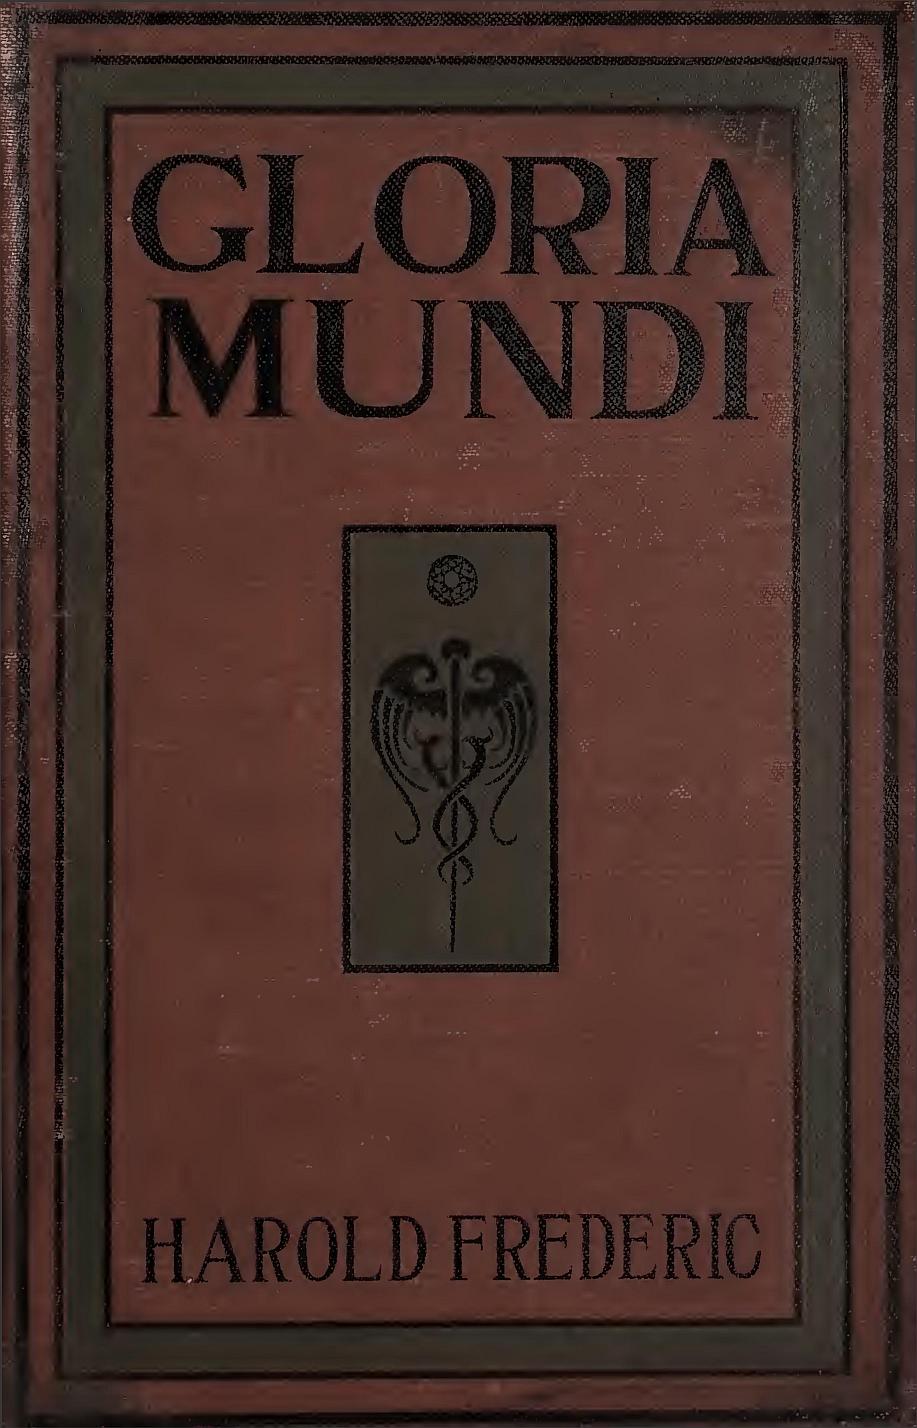 Gloria Mundi, by Harold Frederic pic